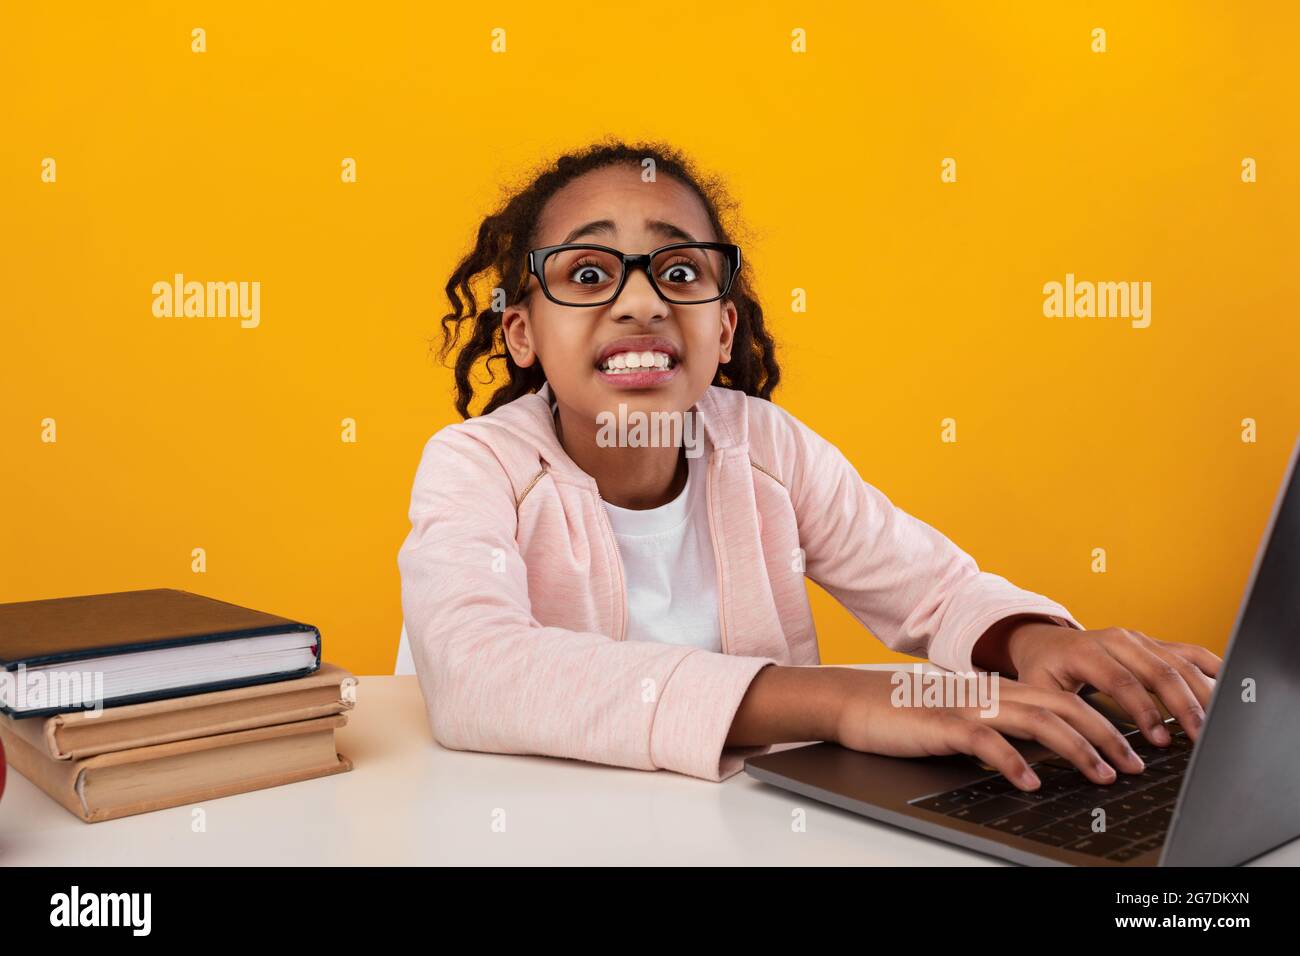 Shocked black girl using laptop and looking at camera Stock Photo